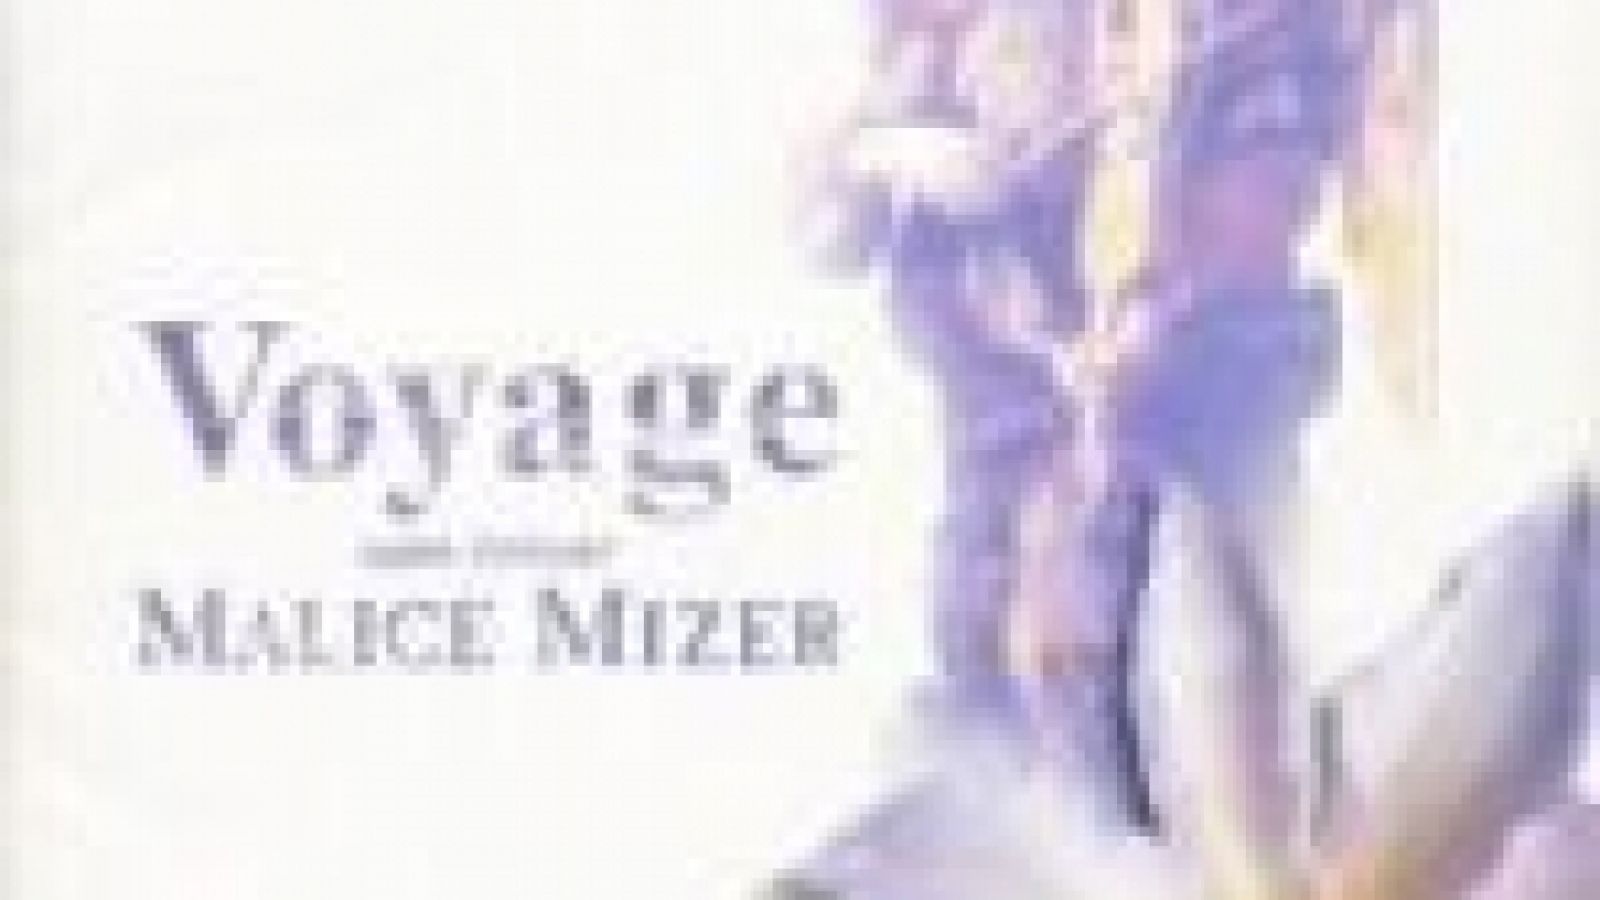 Malice Mizer - Voyage sans retour © JaME Suomi, Raura